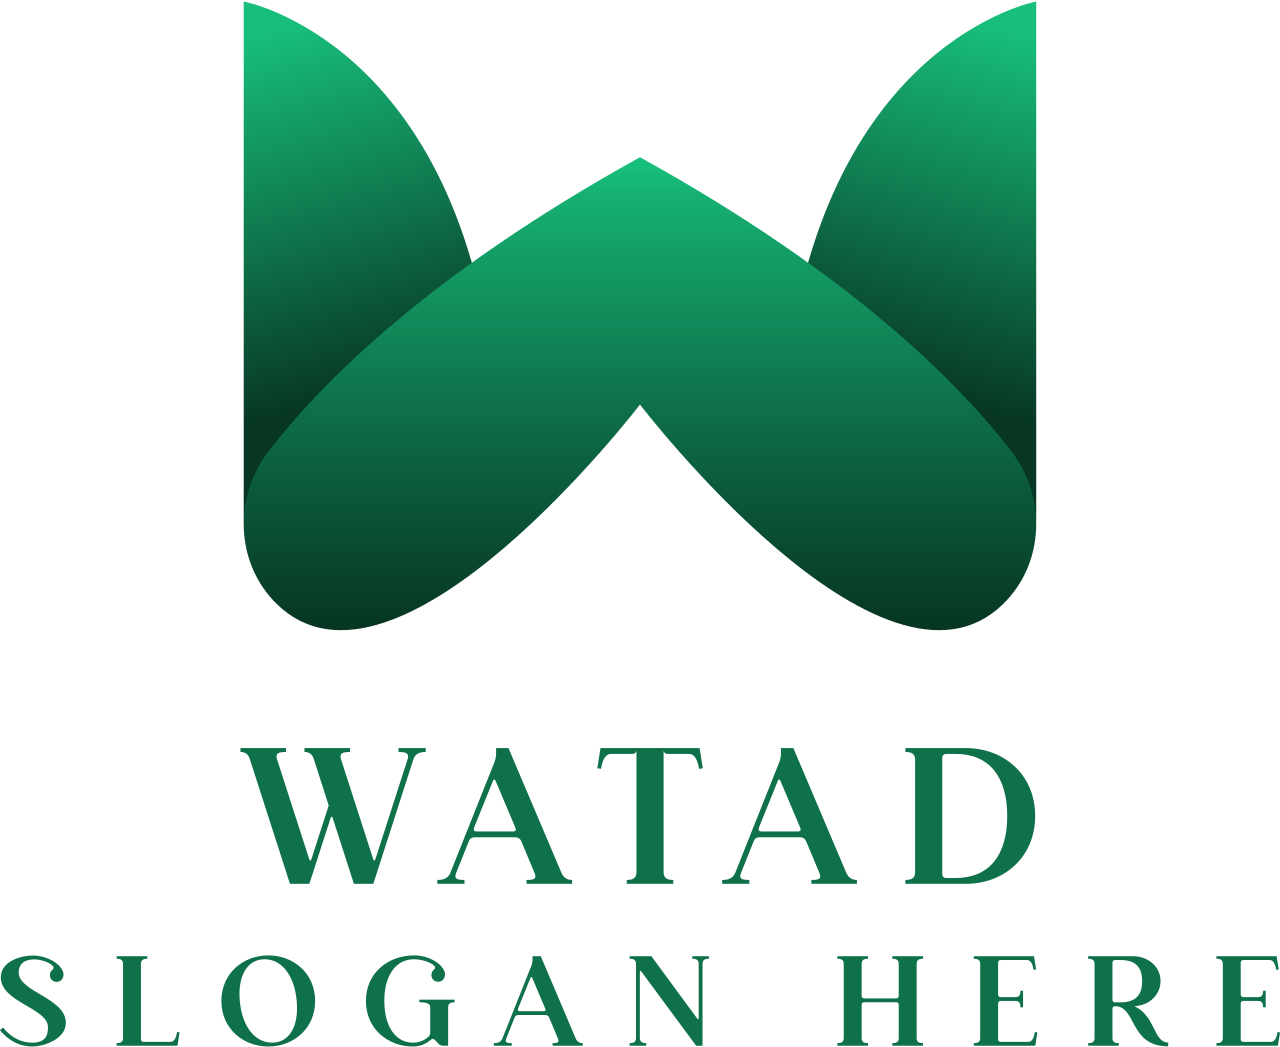 WATAD's logo